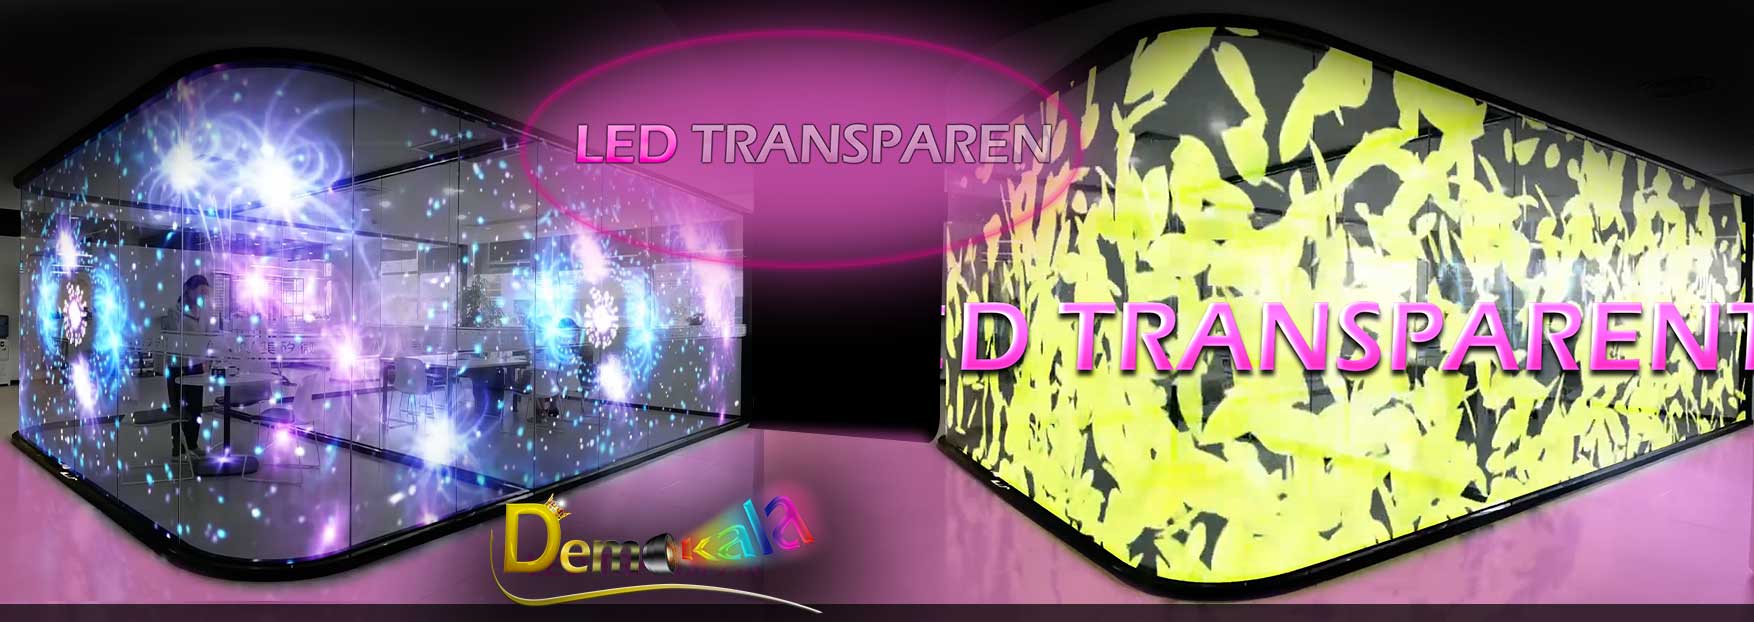 اسلایدر محصول جدید 1403-دموکالا-LED TRANSPARENT-نمایشگر فرانما